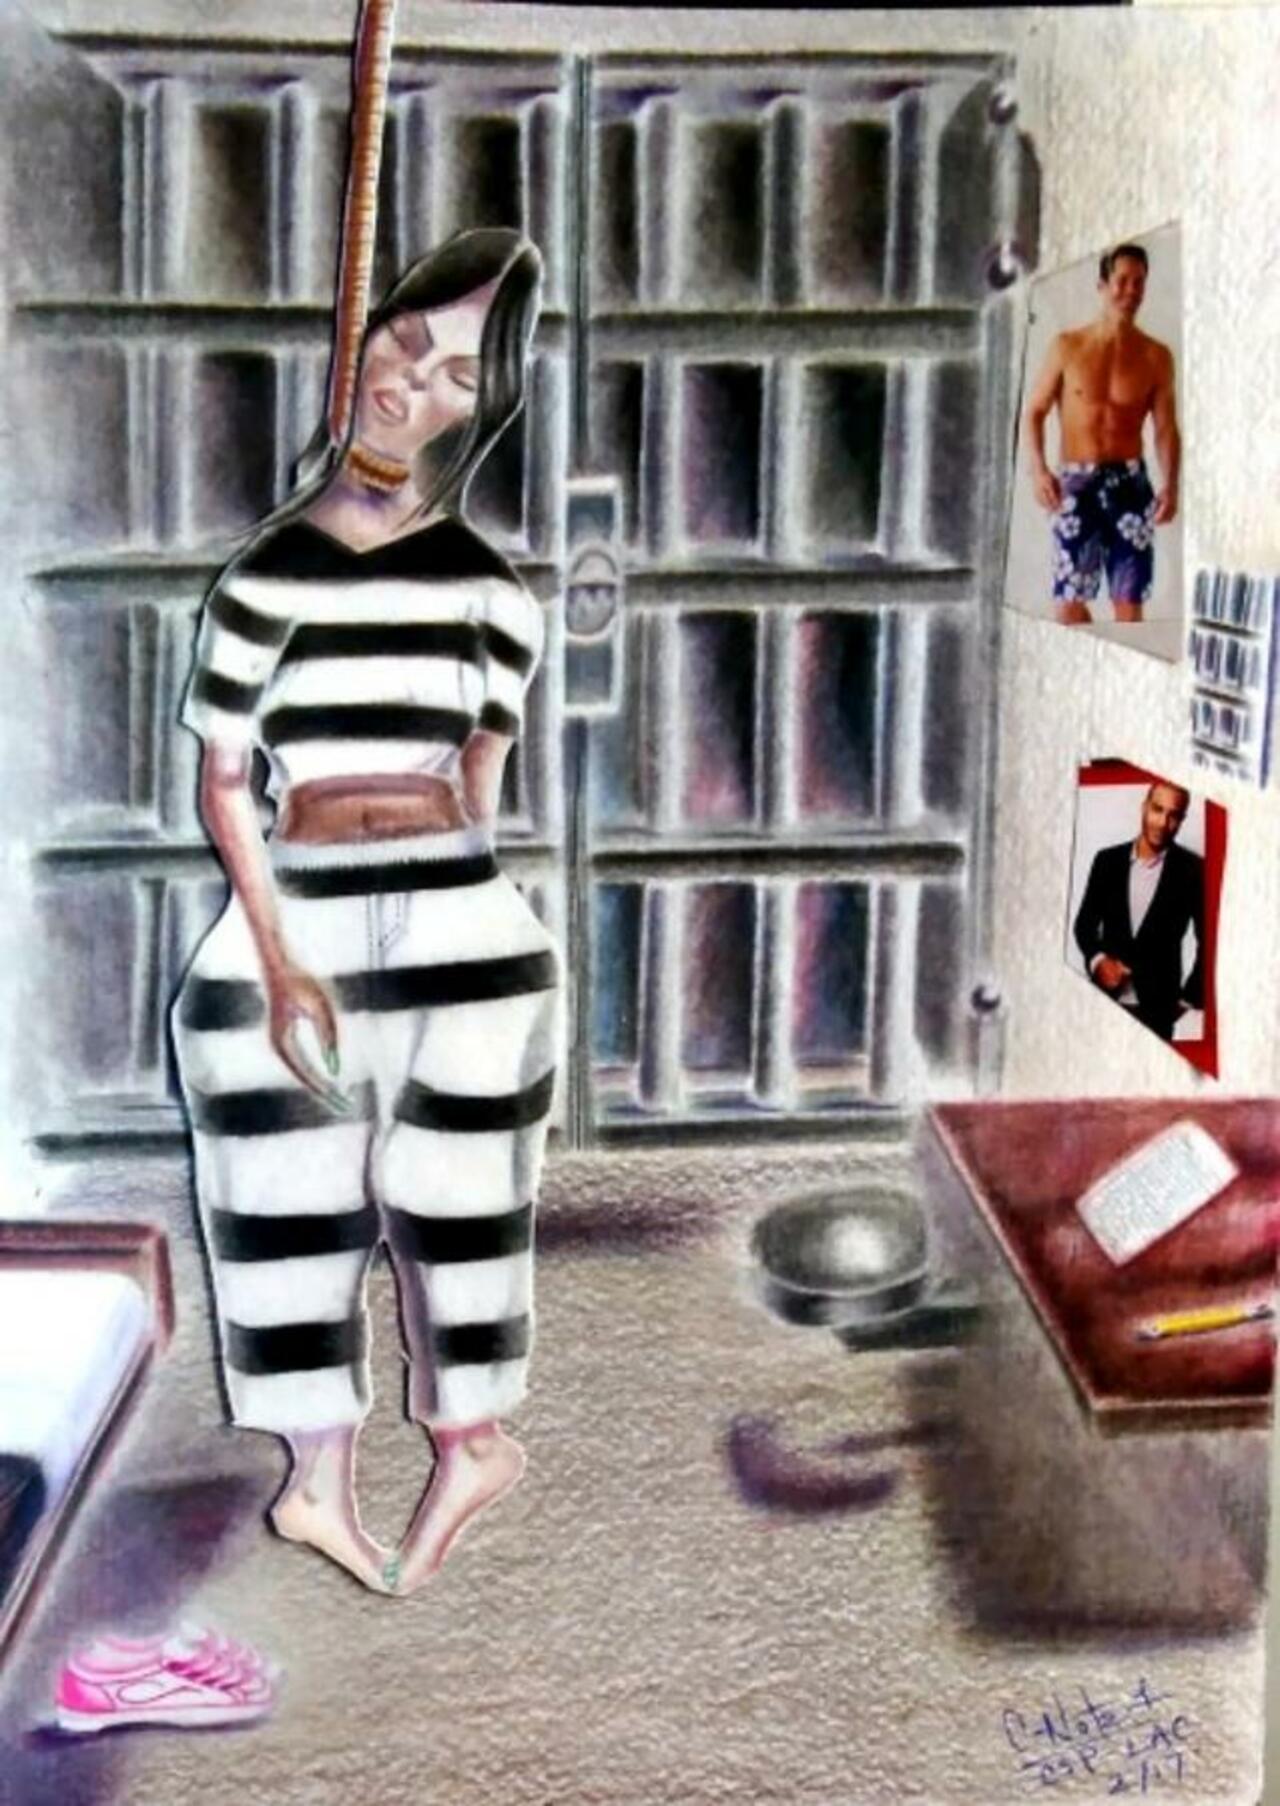 Prisoner-Artist, Donald "C-Note" Hooker, Tells "California Prison Focus", Why Mass Suicides at a California Women's Prison Inspired His Work 'Strange Fruit'. See post in California Prison Focus: http://newest.prisons.org/articles/88 #women #CiteBlackWomen #cut50 #art #prisonart #neojimcrowart https://t.co/AgySIBf795